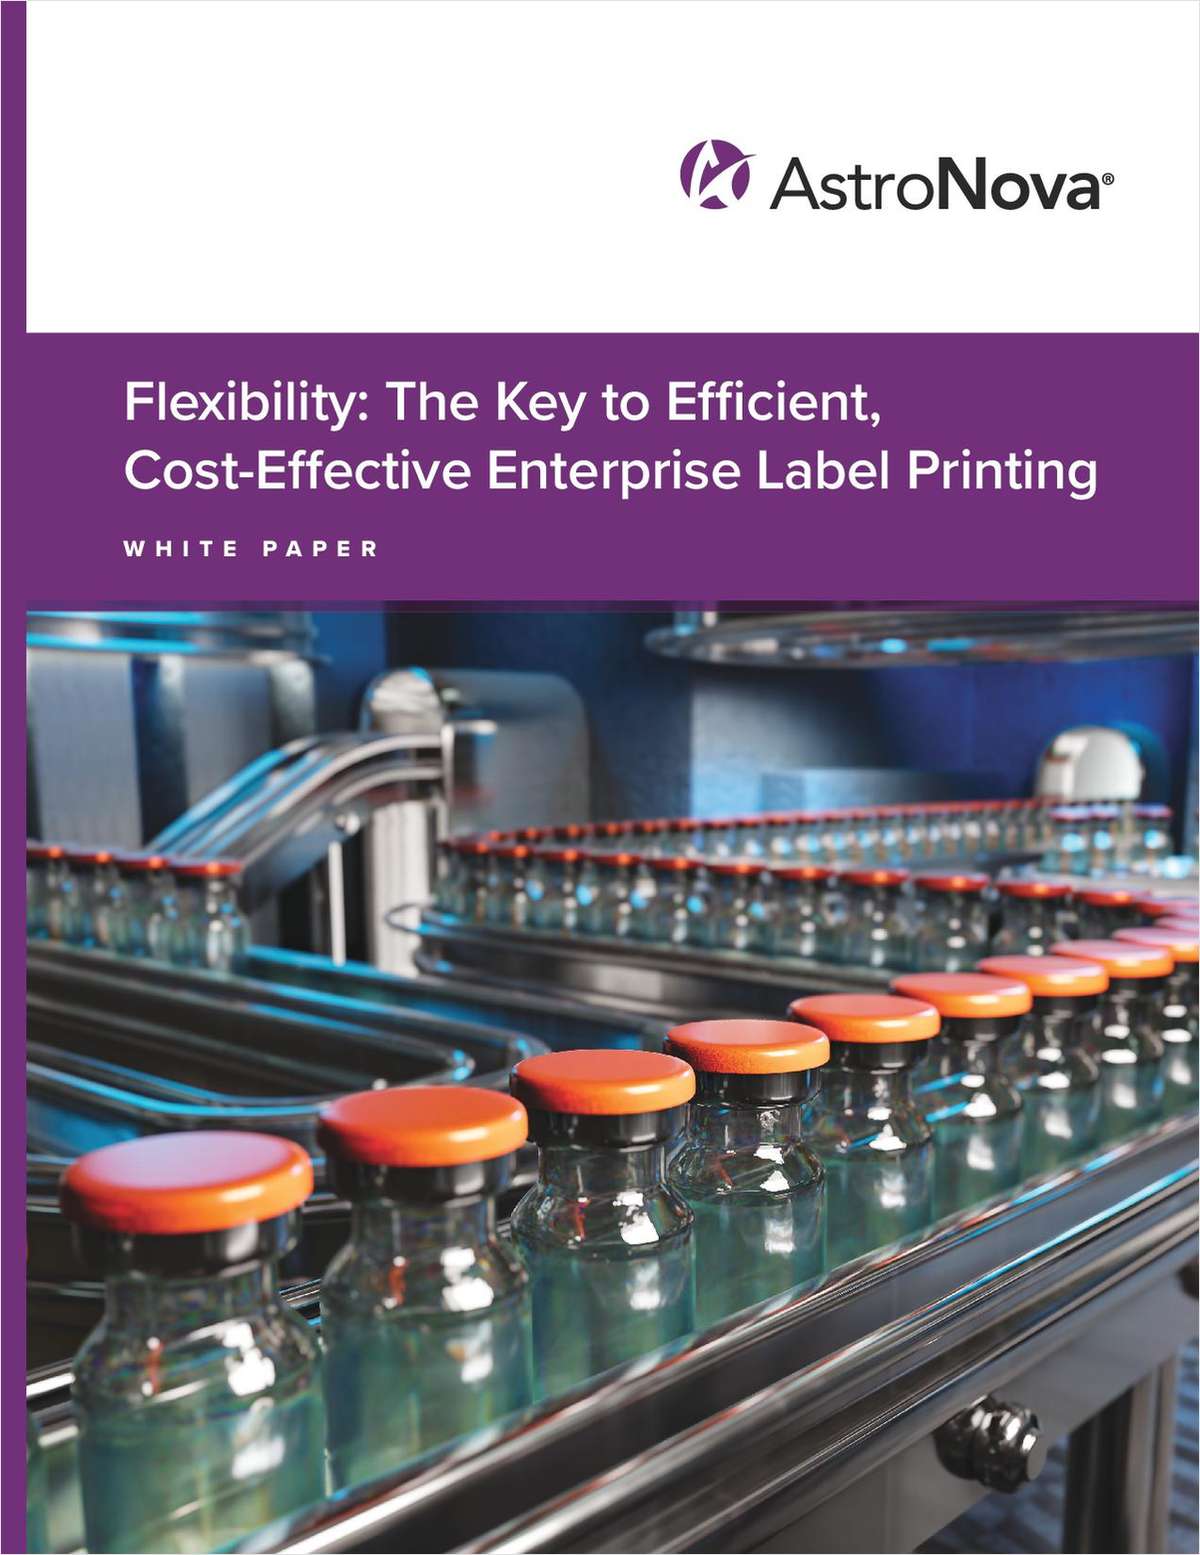 Flexibility: Key to Efficient, Cost-Effective Enterprise Label Printing